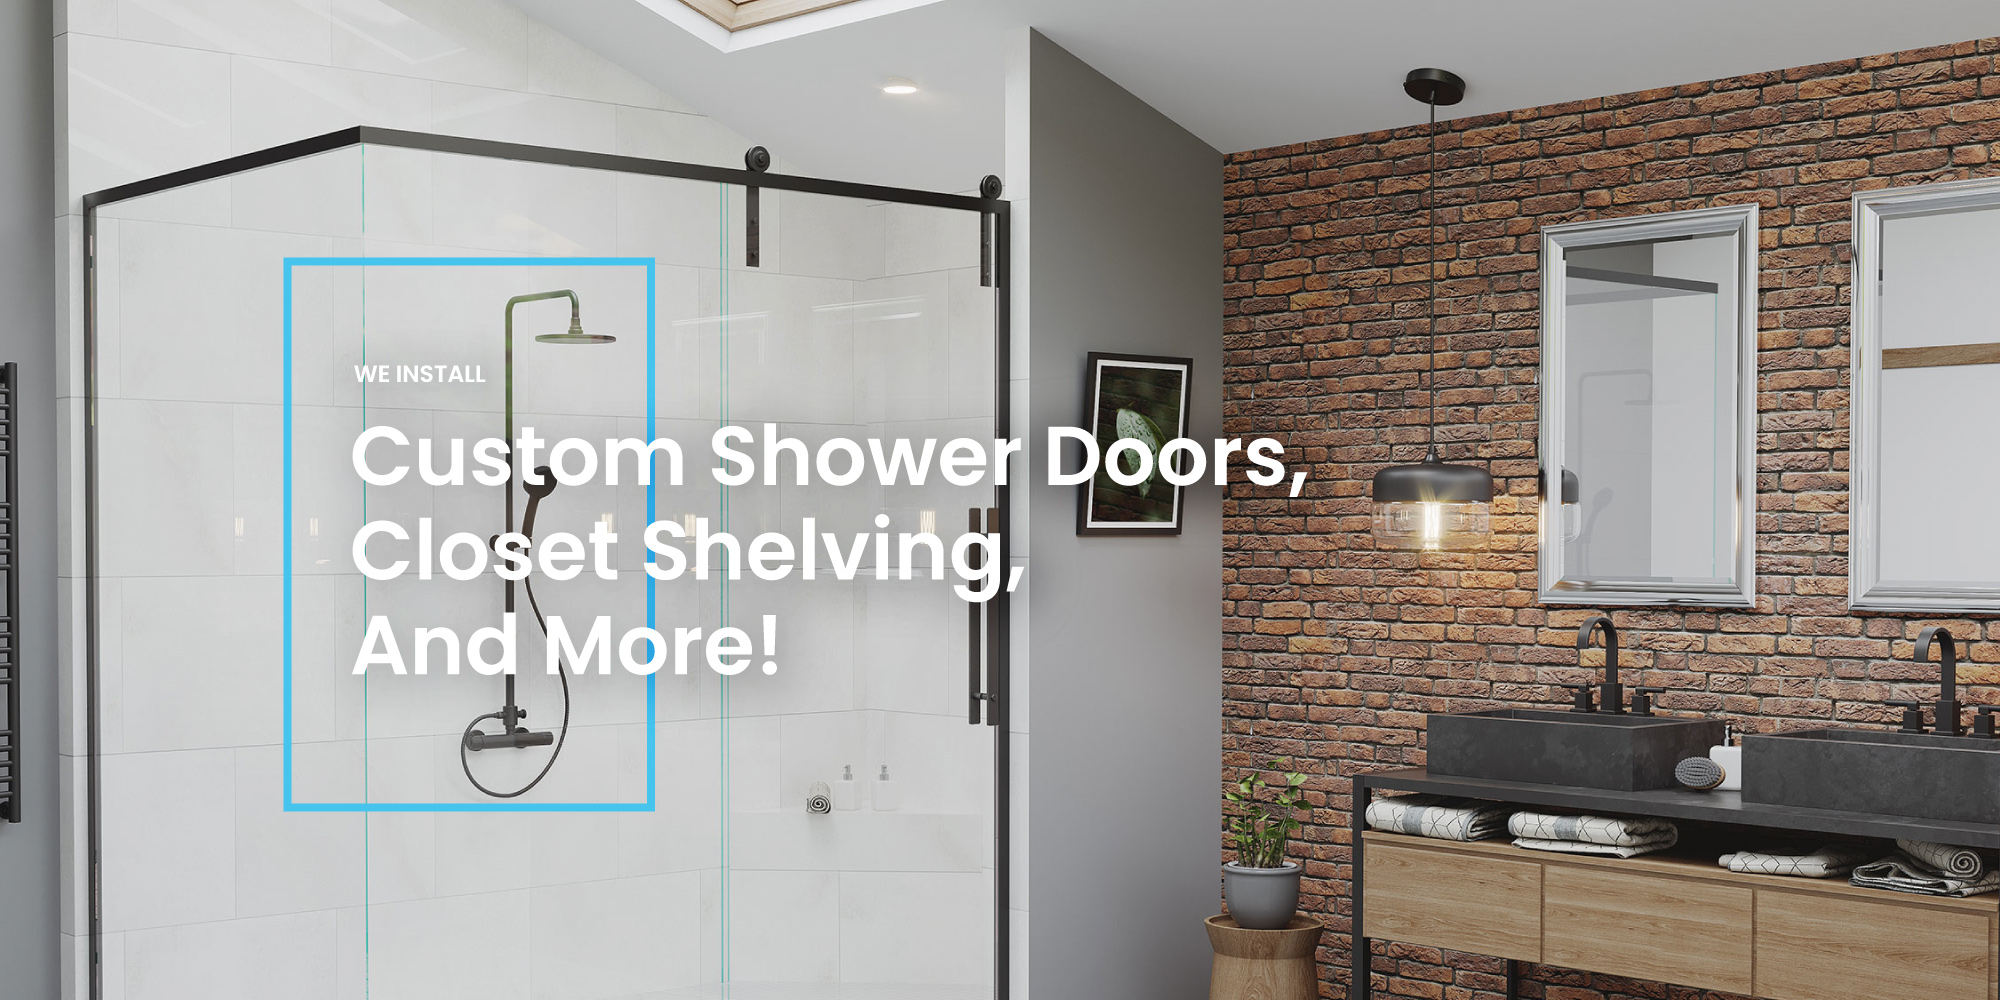 We install custom shower doors, closet shelving, and more!